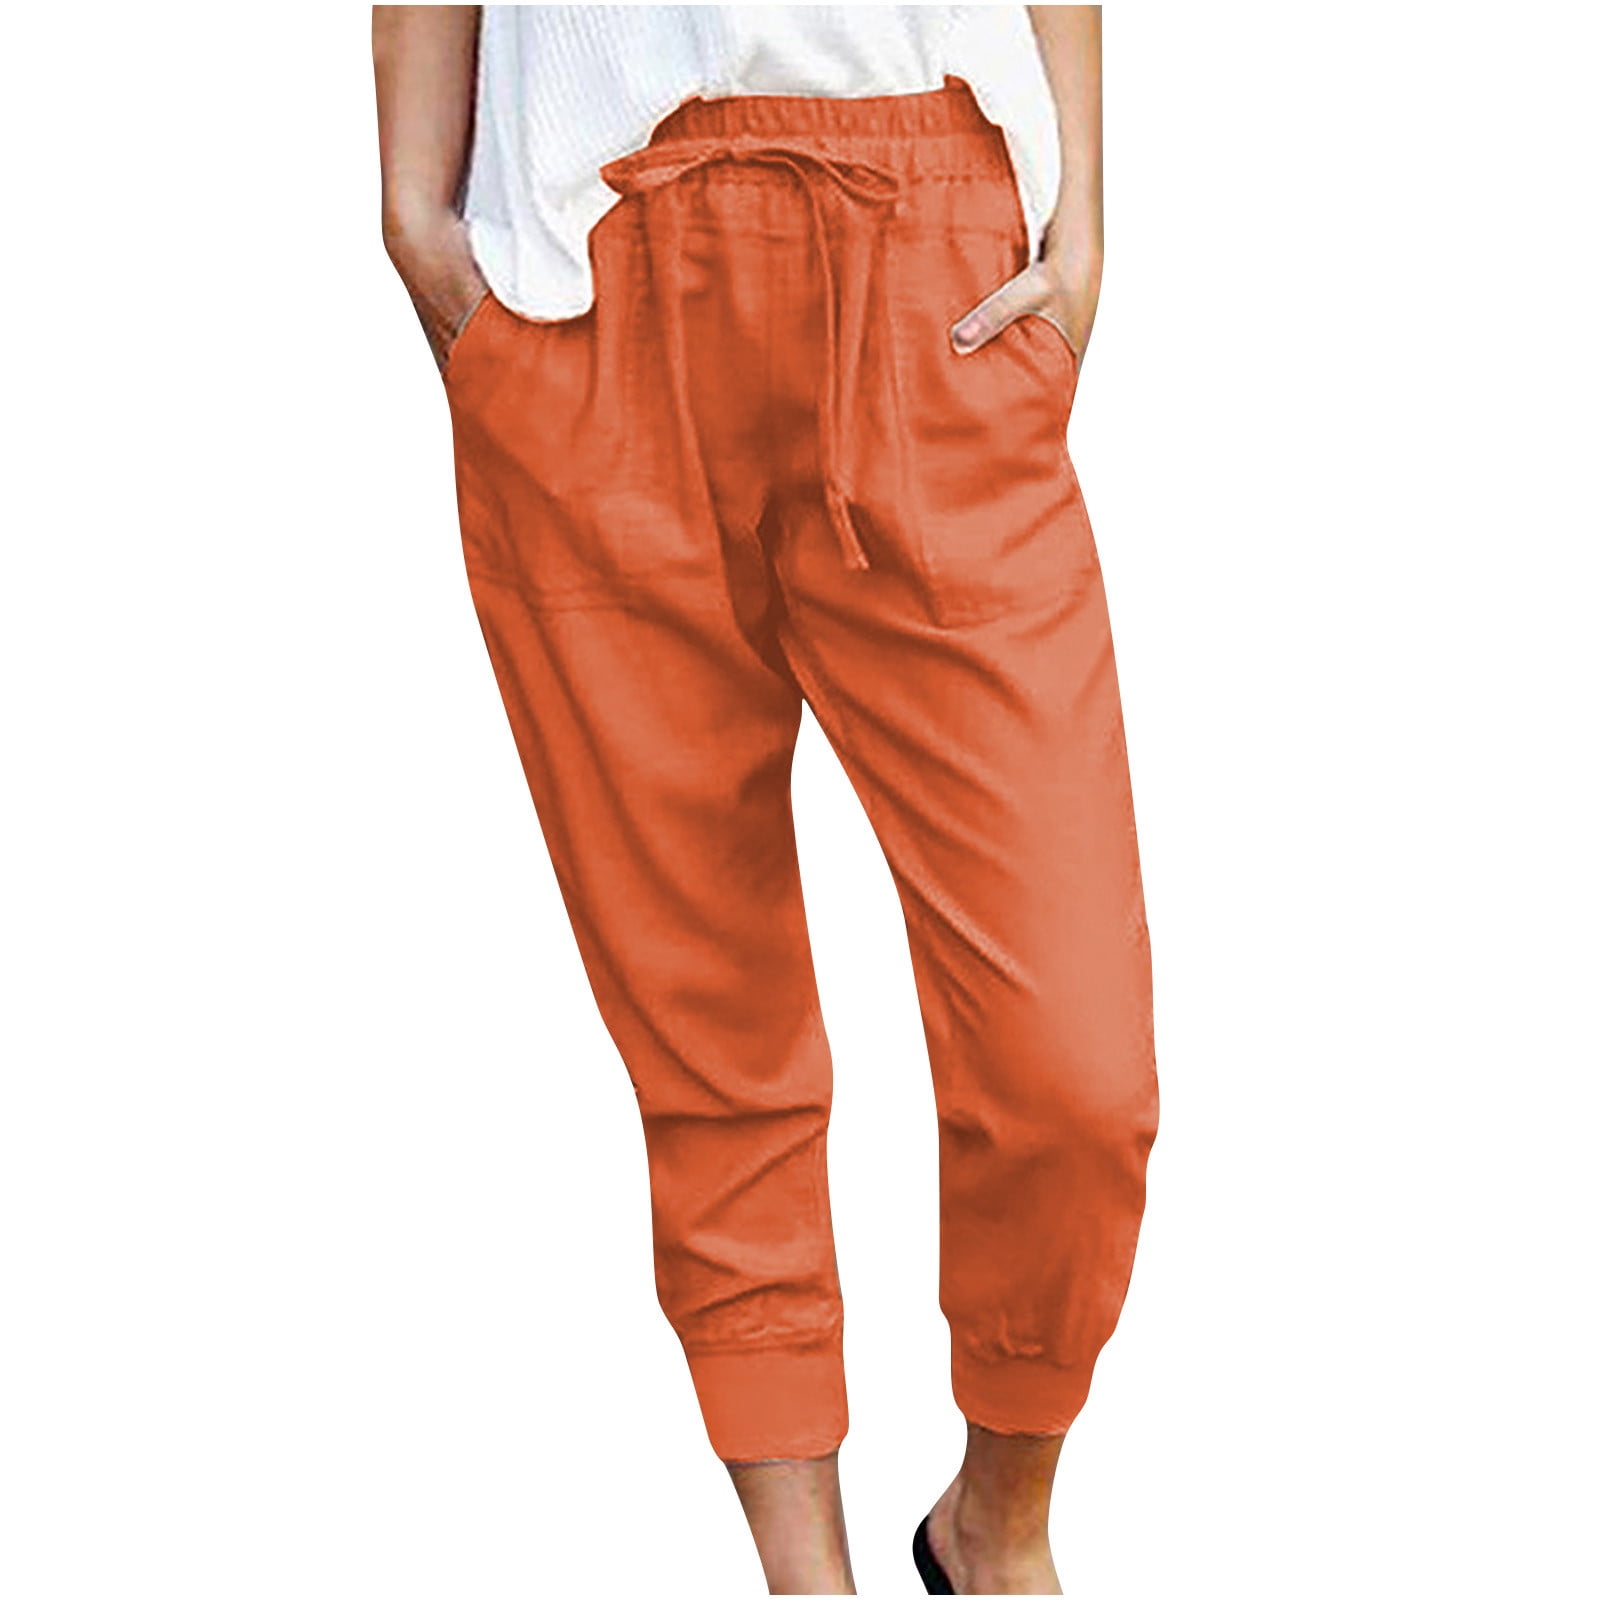 Zzwxwb Long Pants For Women Women Casual Solid Cotton Linen 